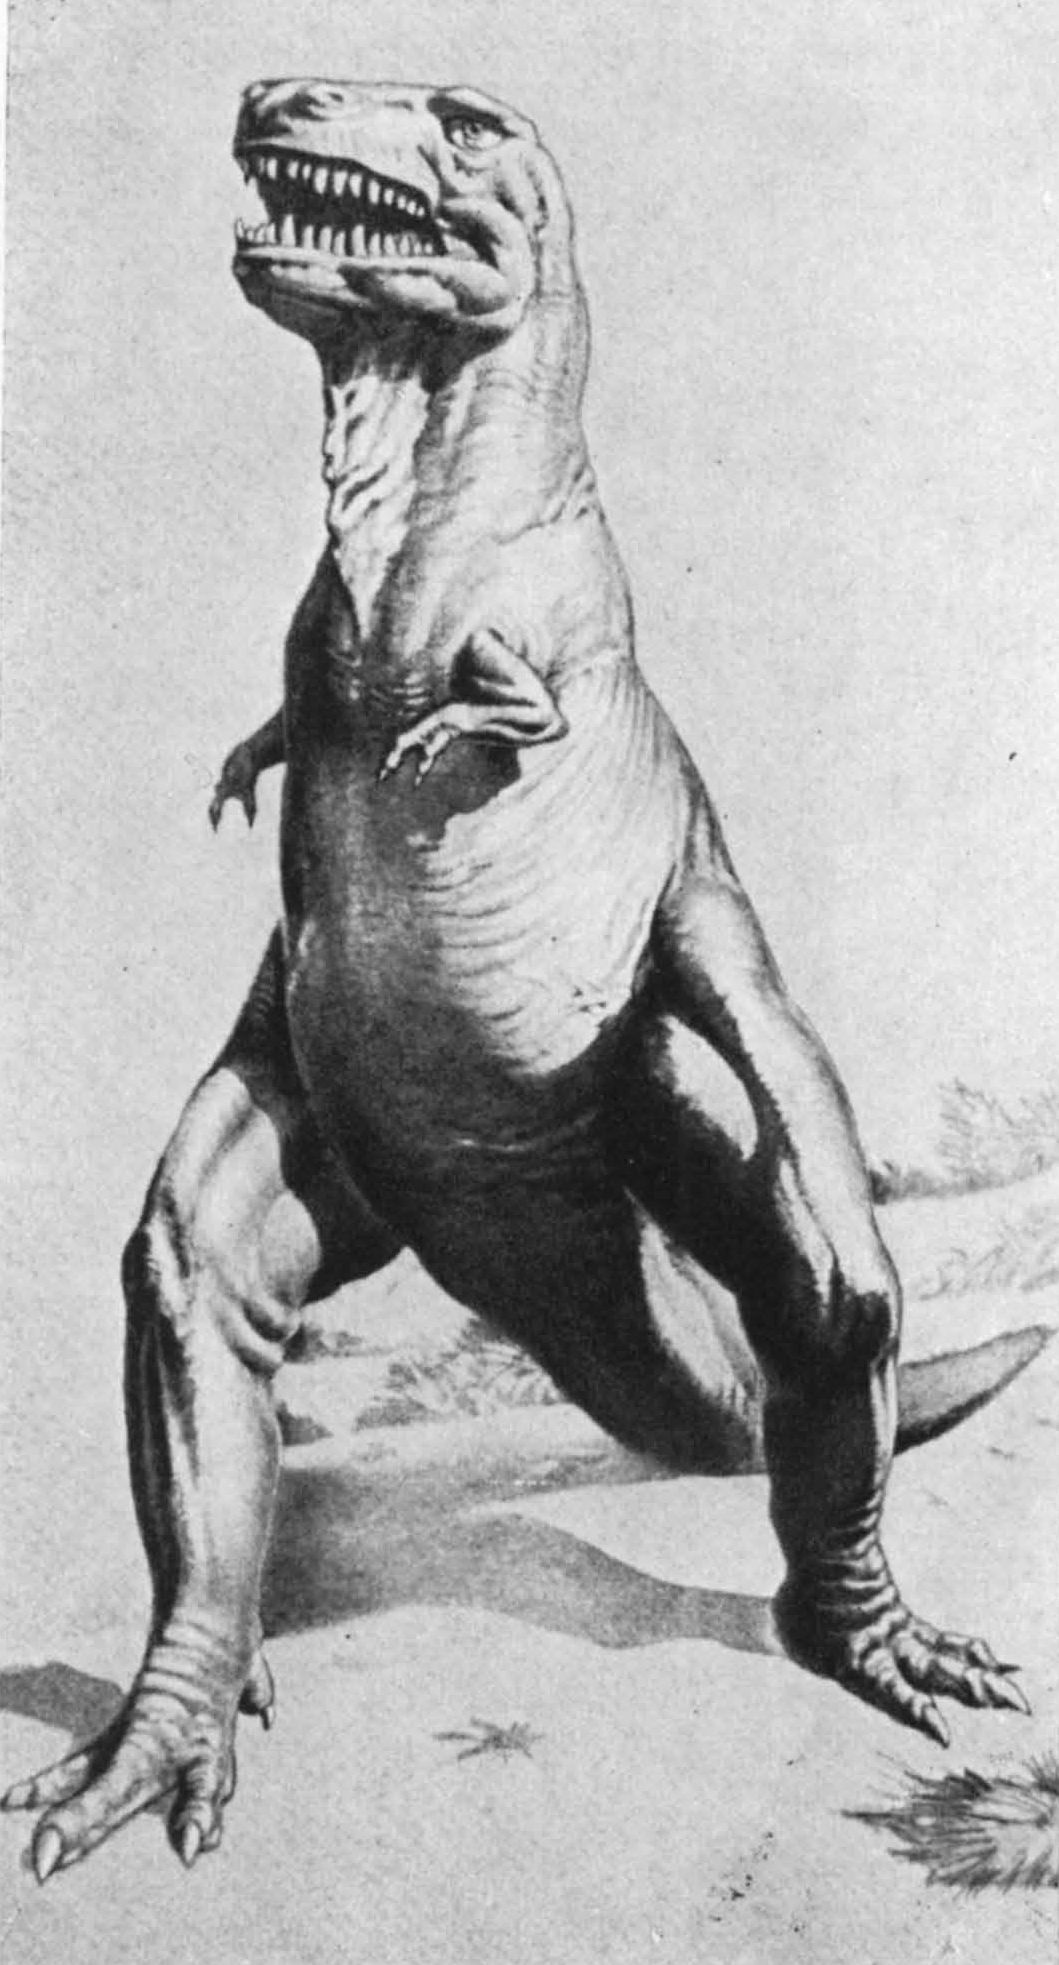 Рис. XXVII. Тираннозавр (Tyrannosaurus). Реконструкция внешнего вида (W.E. Swinton, 1964)